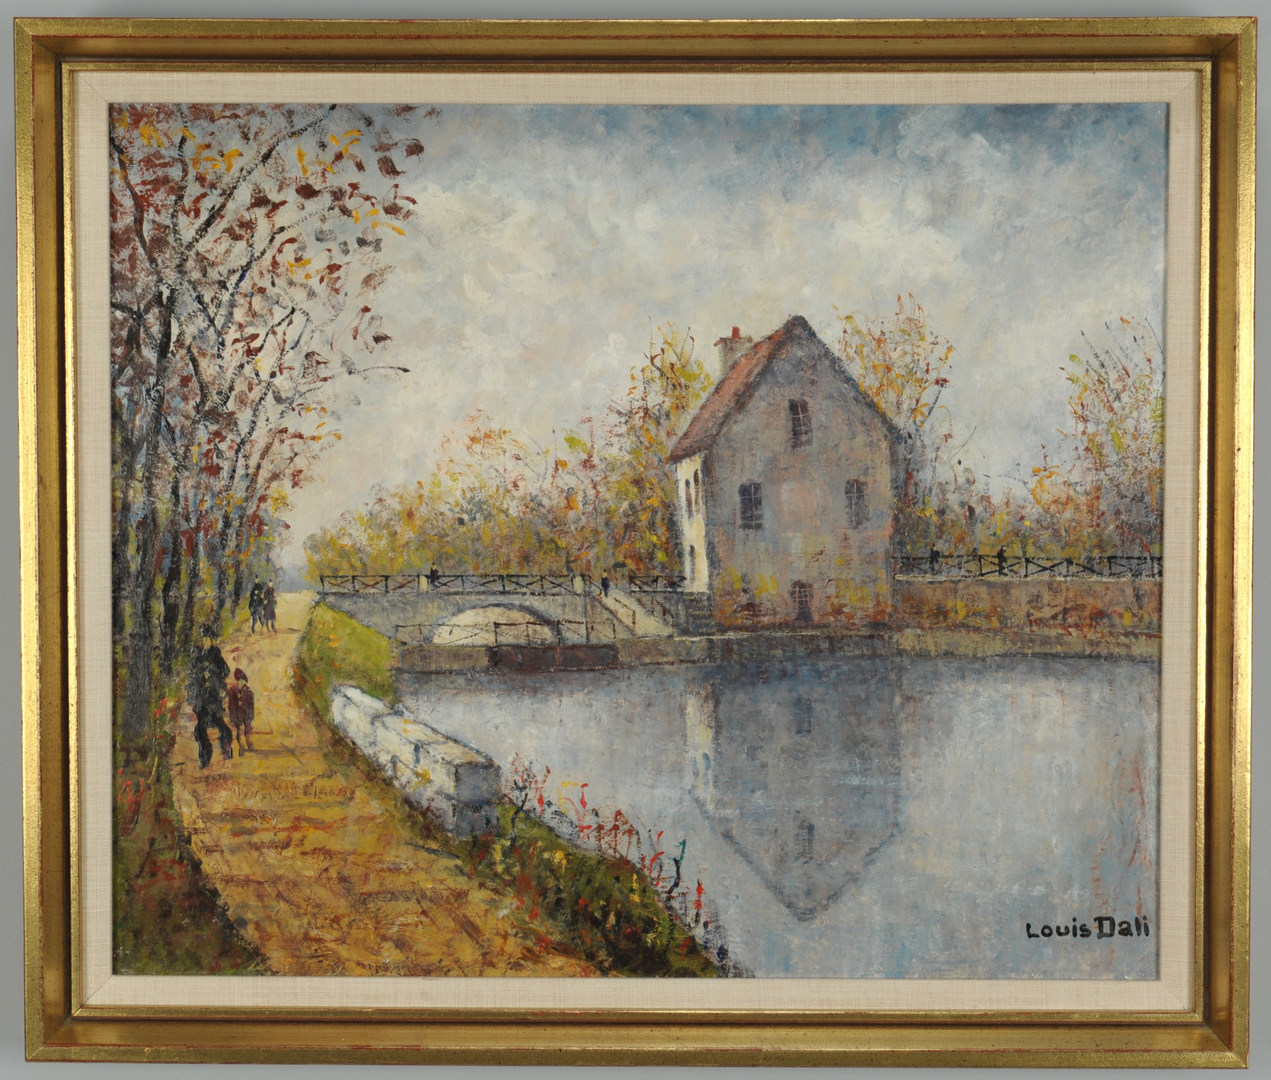 Lot 346: Louis Dali oil on canvas, landscape with house